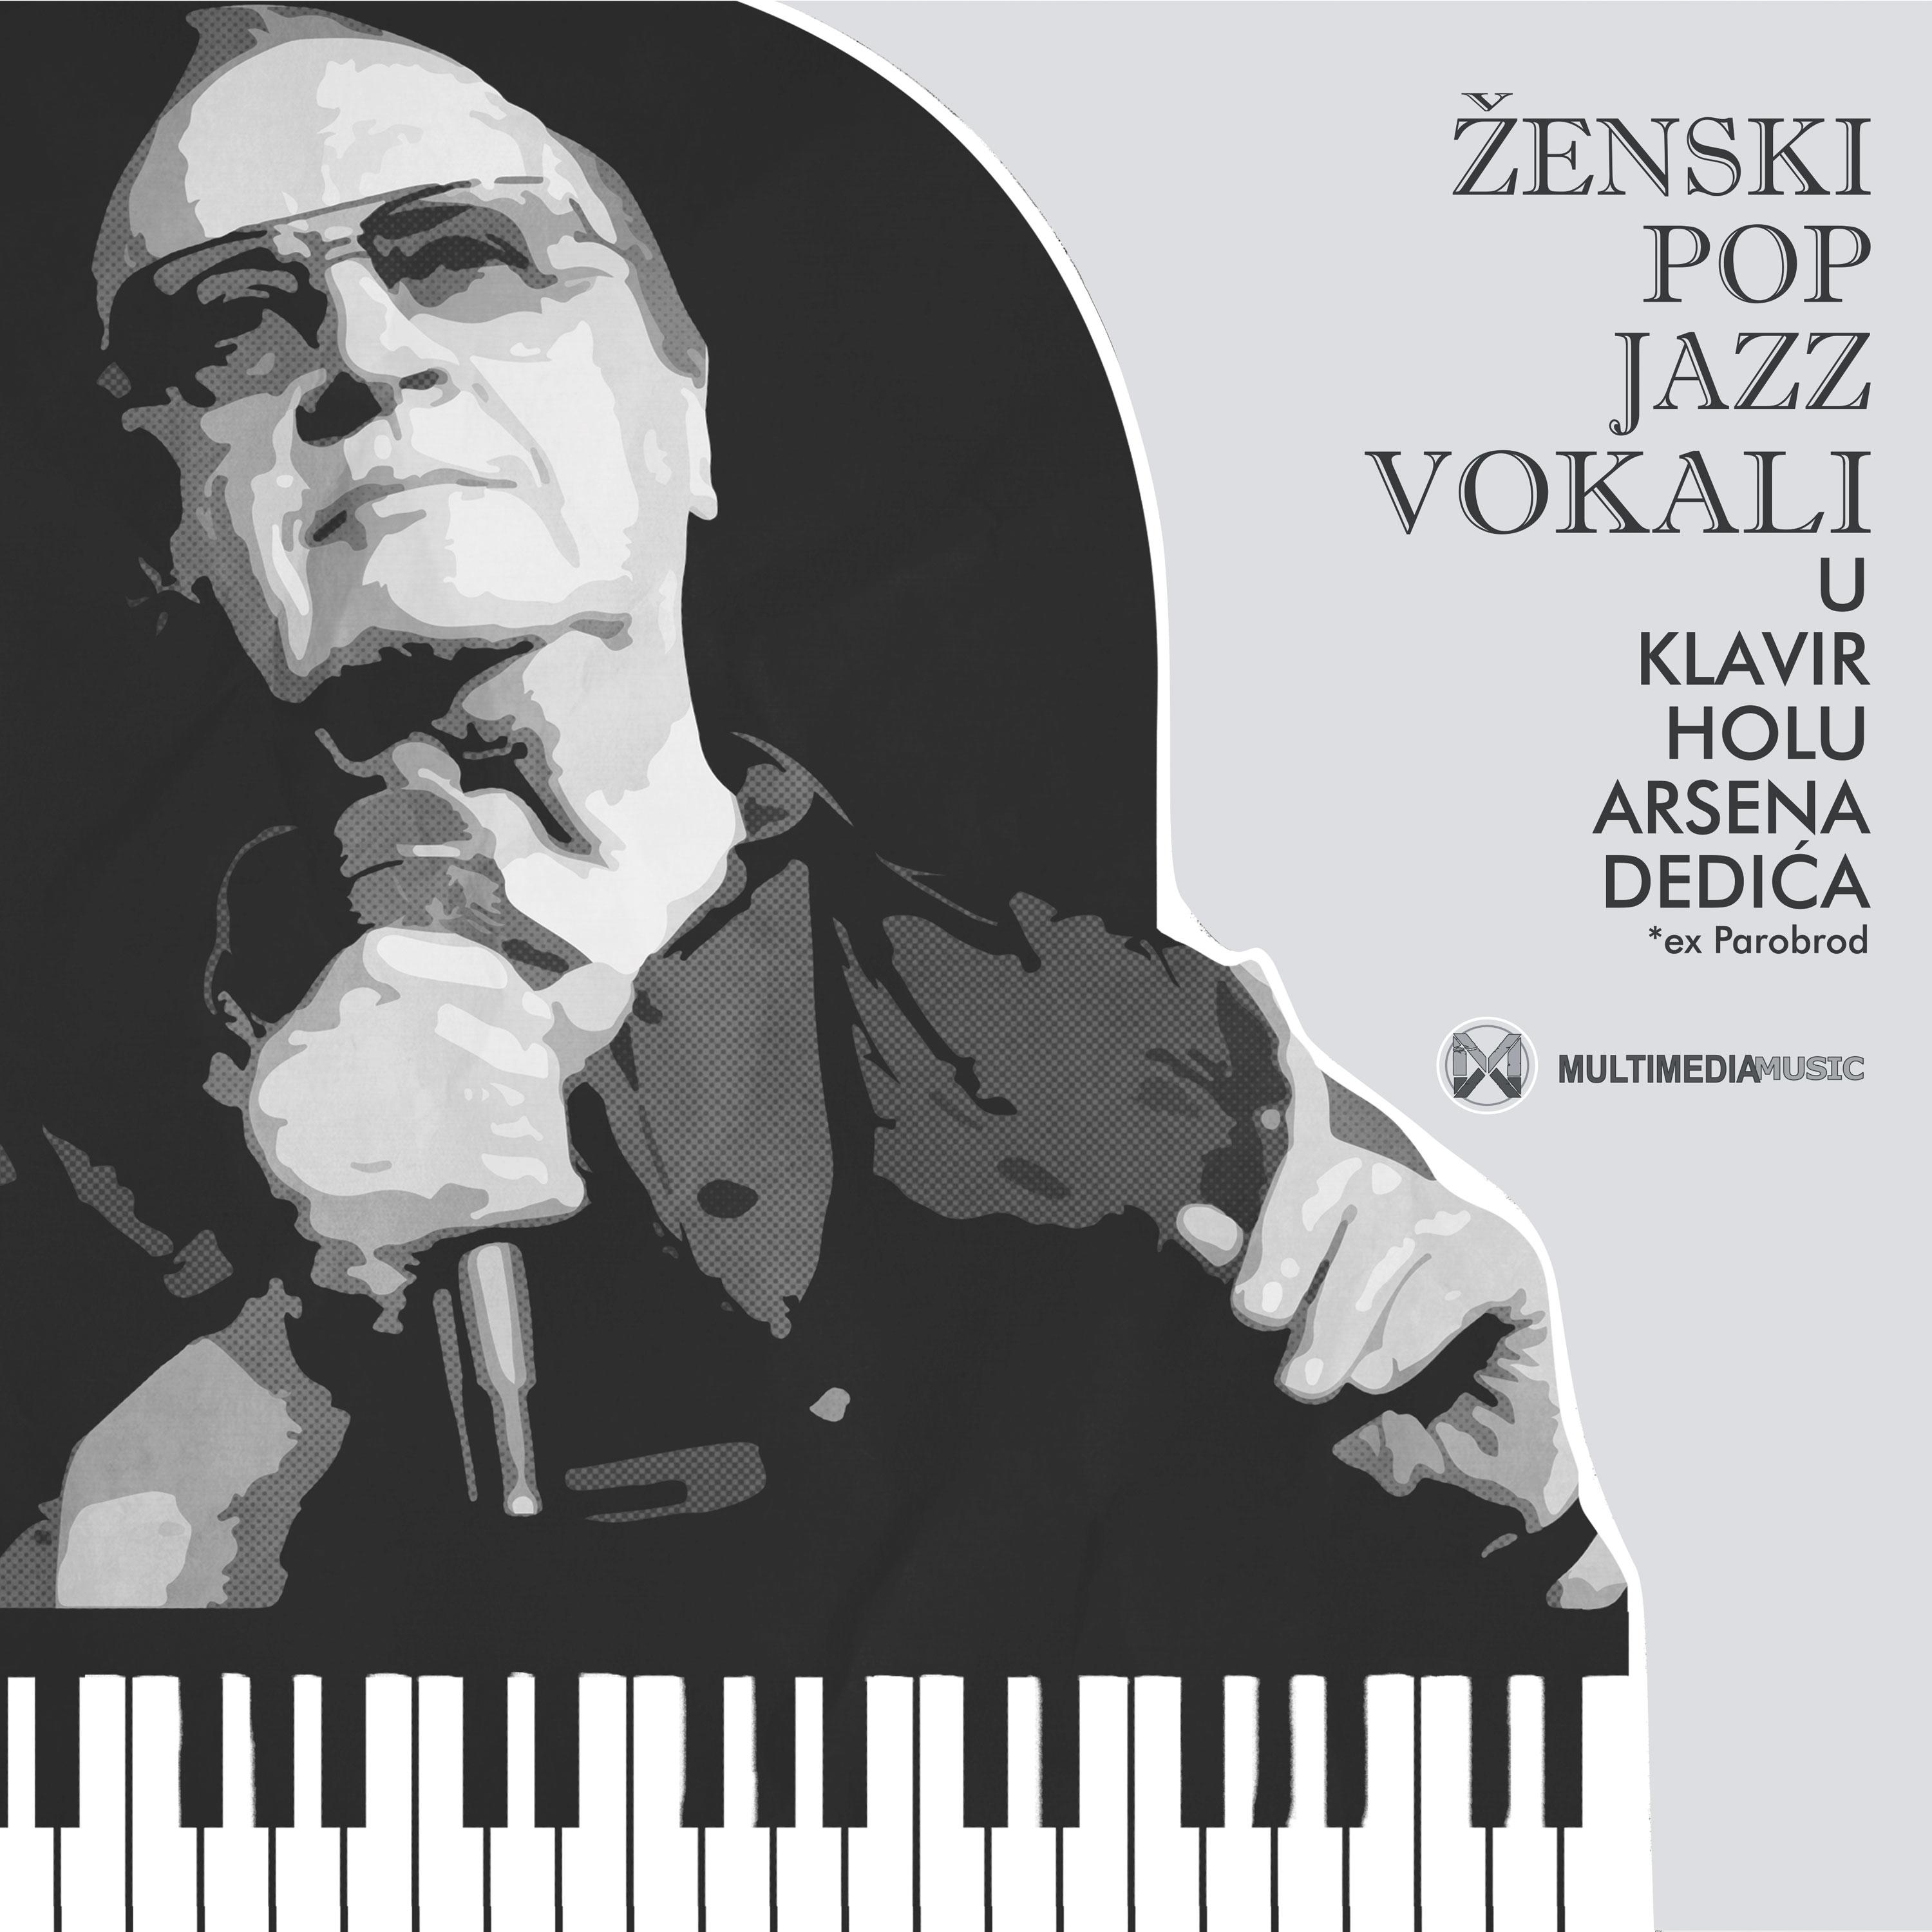 Zenski Pop Jazz vokali u Klavir holu Arsena Dedica (Zenski Pop Jazz vokali)